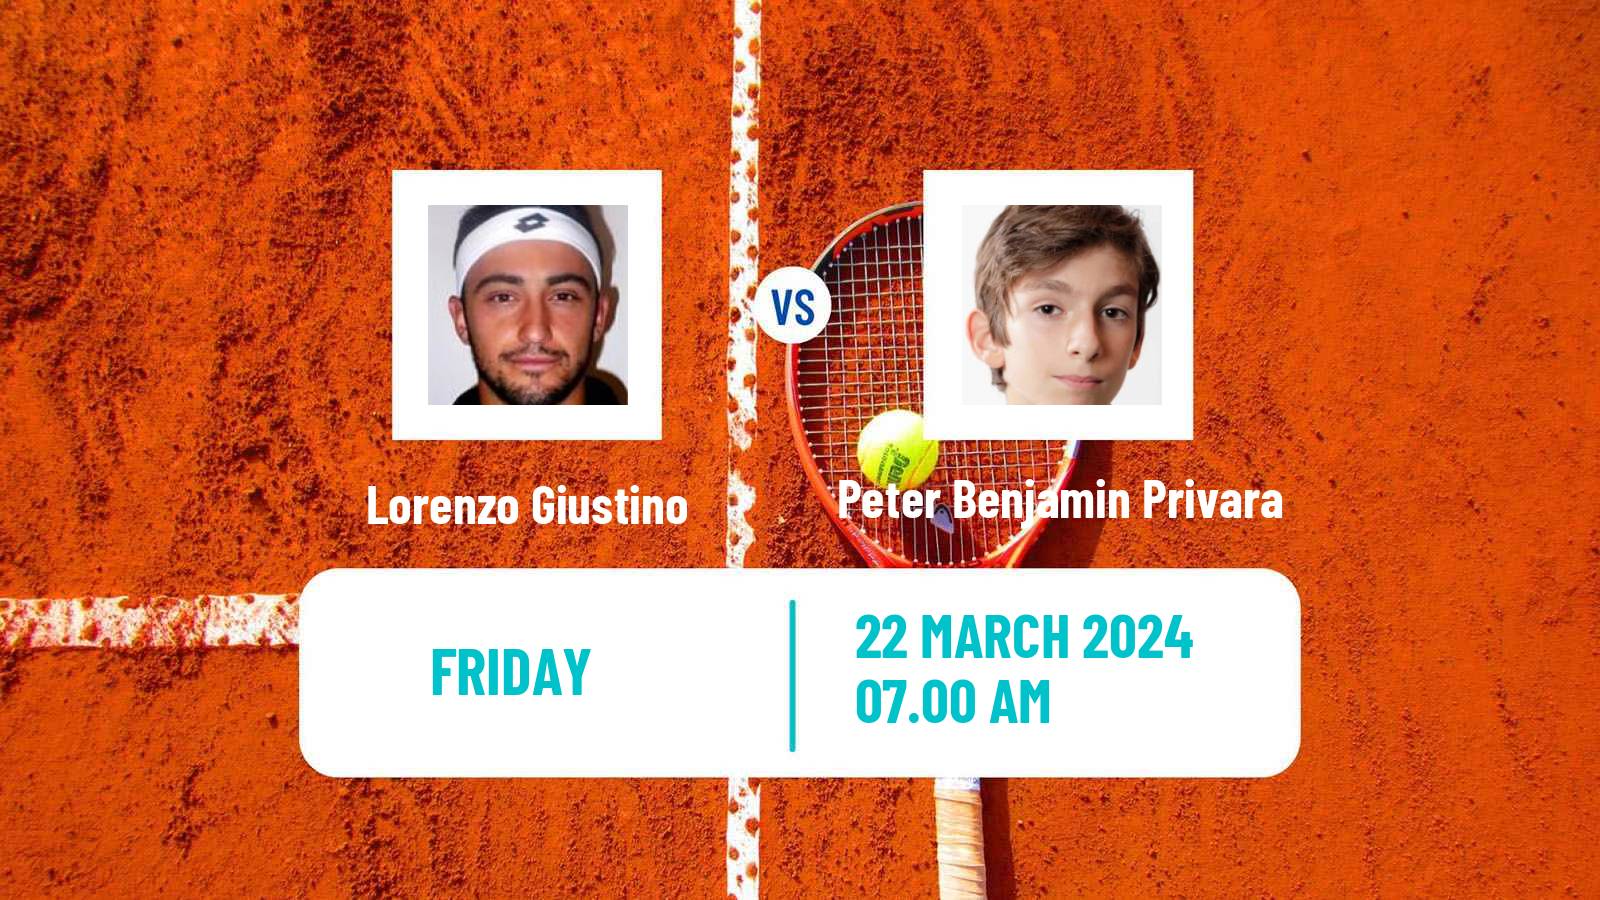 Tennis ITF M25 Badalona Men Lorenzo Giustino - Peter Benjamin Privara